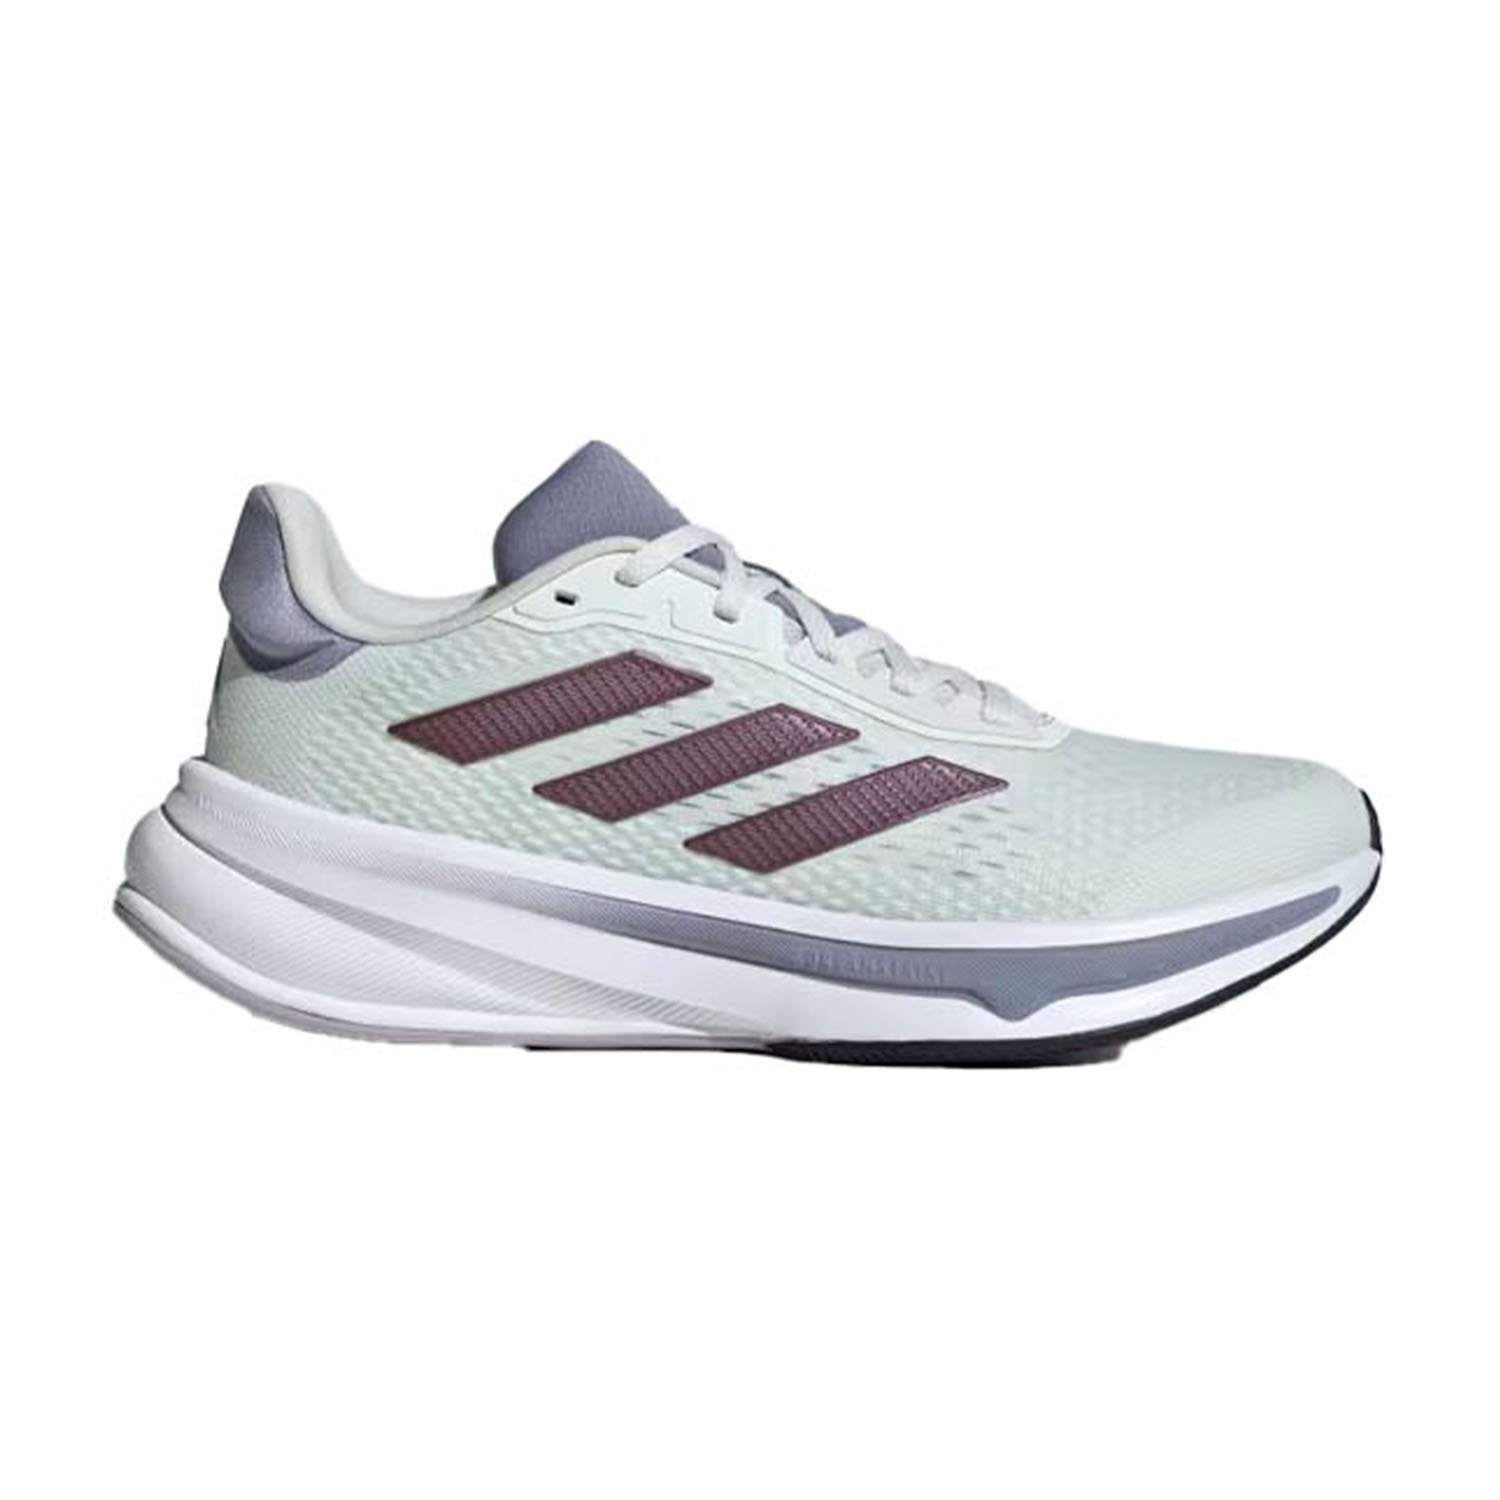 Adidas Response Super Kadın Koşu Ayakkabısı - Renkli - 1